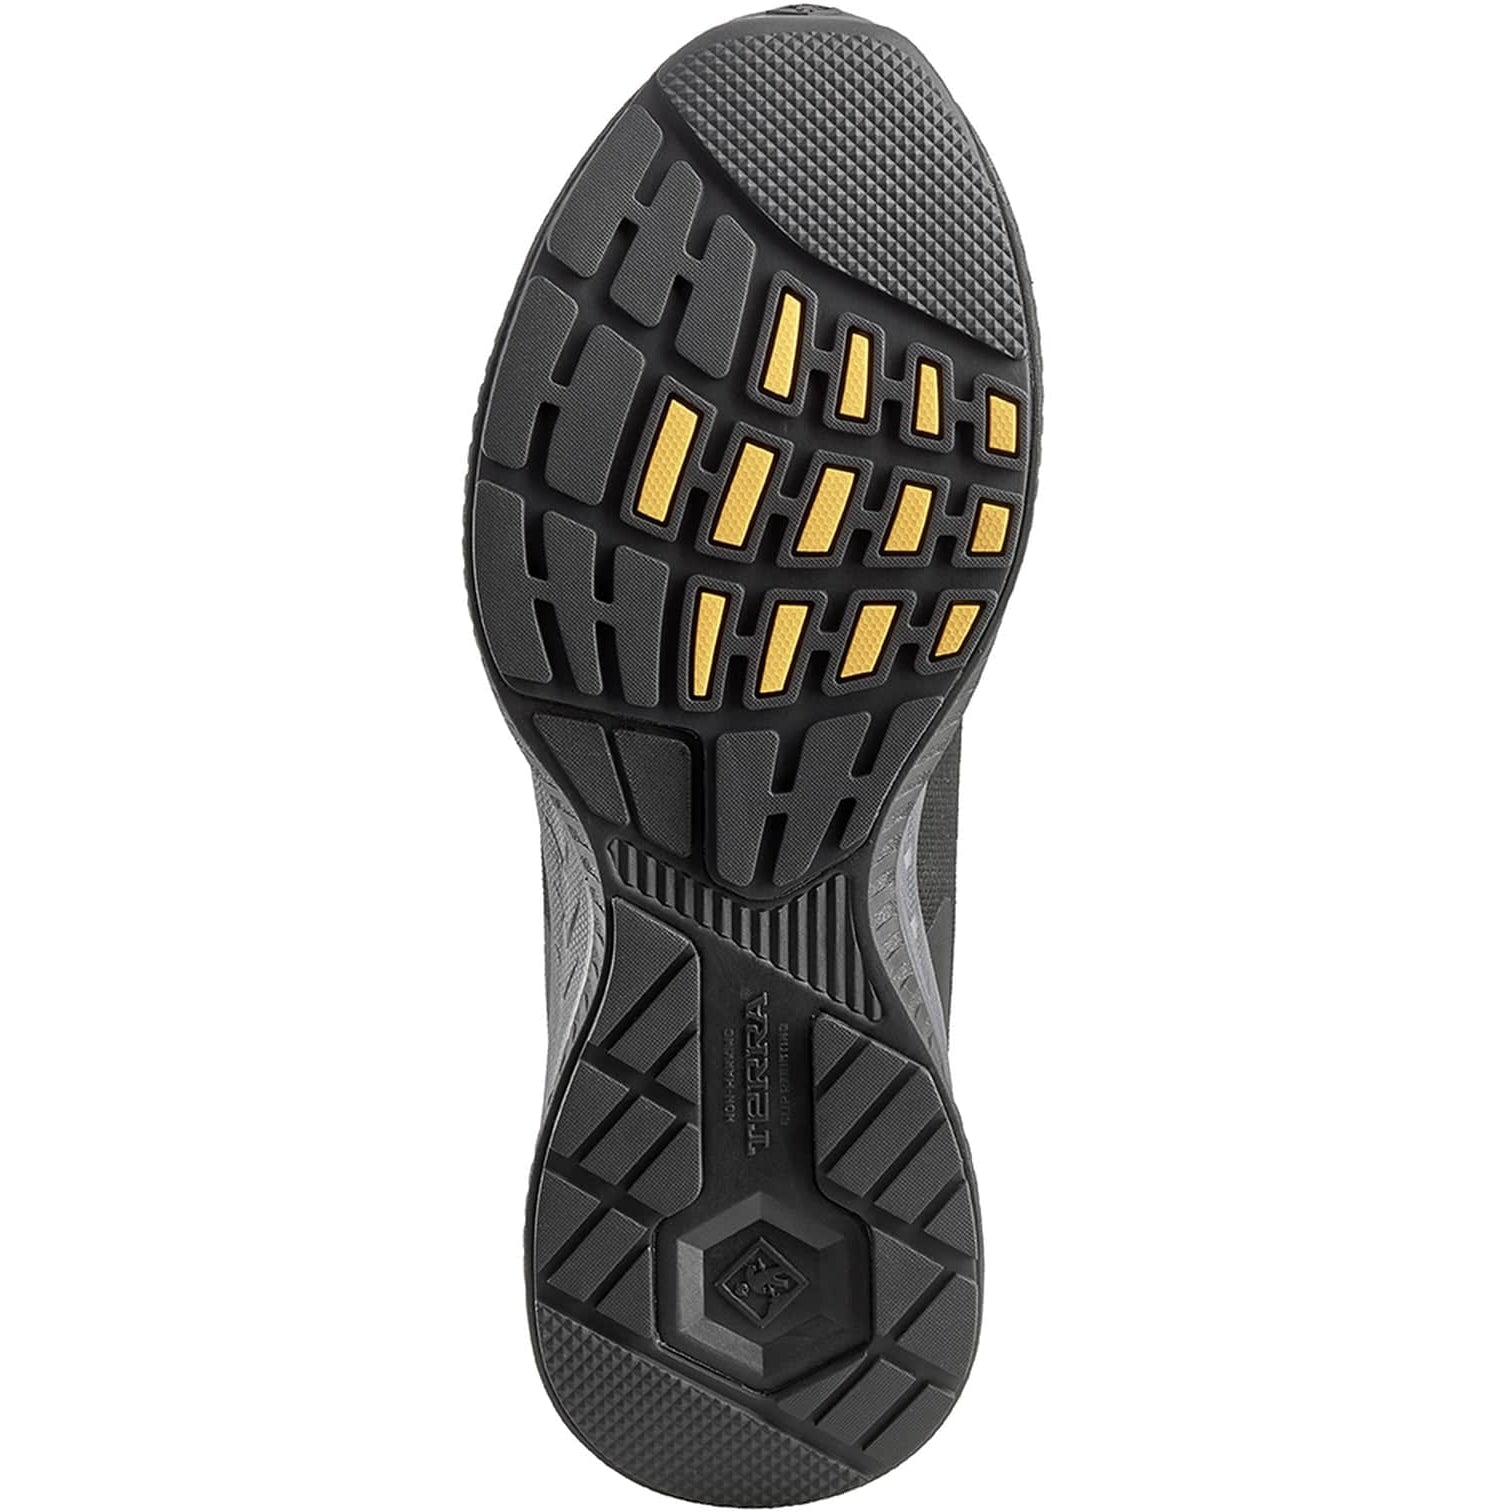 Terra Men's Eclipse Comp Toe Slip Resist Athletic Work Shoe -Black- 4T8NBY  - Overlook Boots